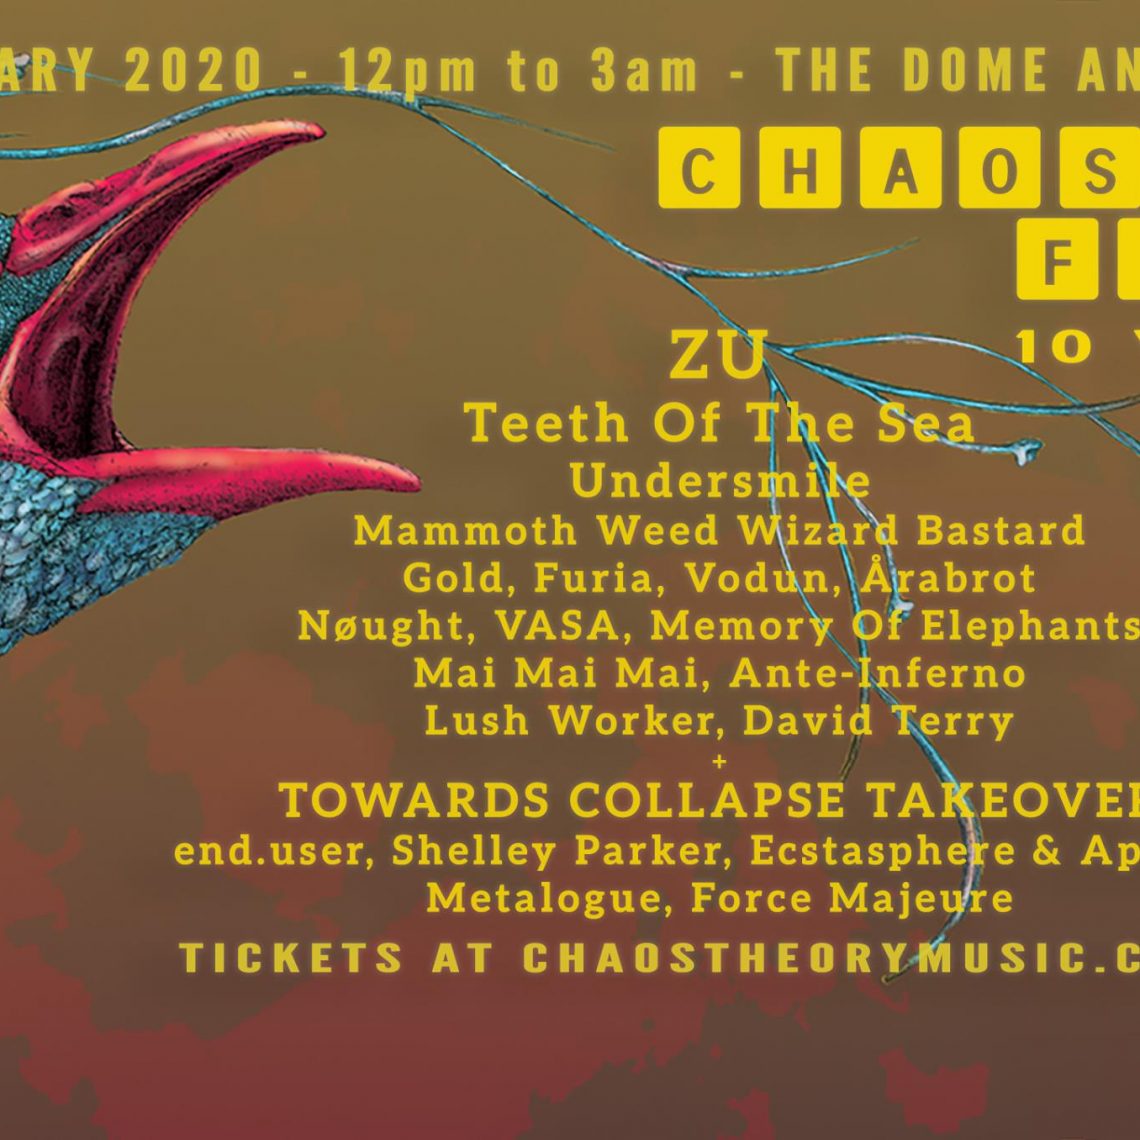 Chaos Theory Festival / 29th Feb / ZU, Teeth of the Sea, Årabrot, Gold, Mammoth Weed Wizard Bastard, Vodun, Undersmile + more